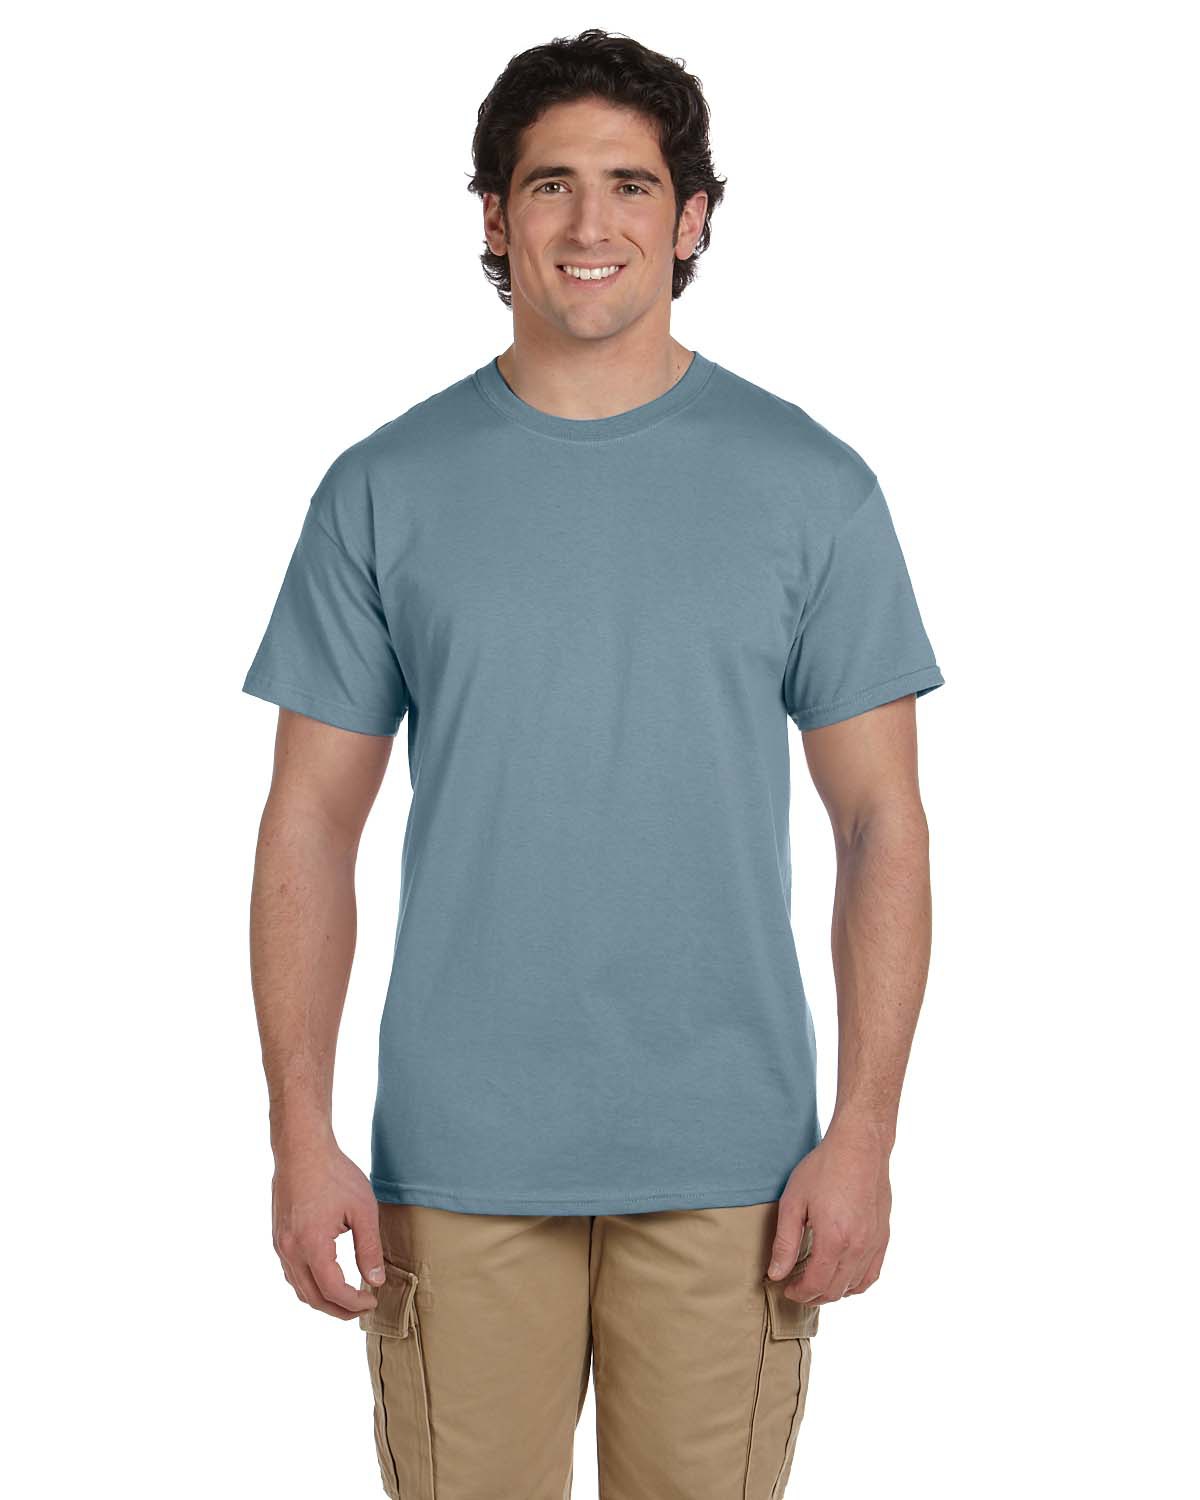 Cotton 6 oz G200 T-Shirt 